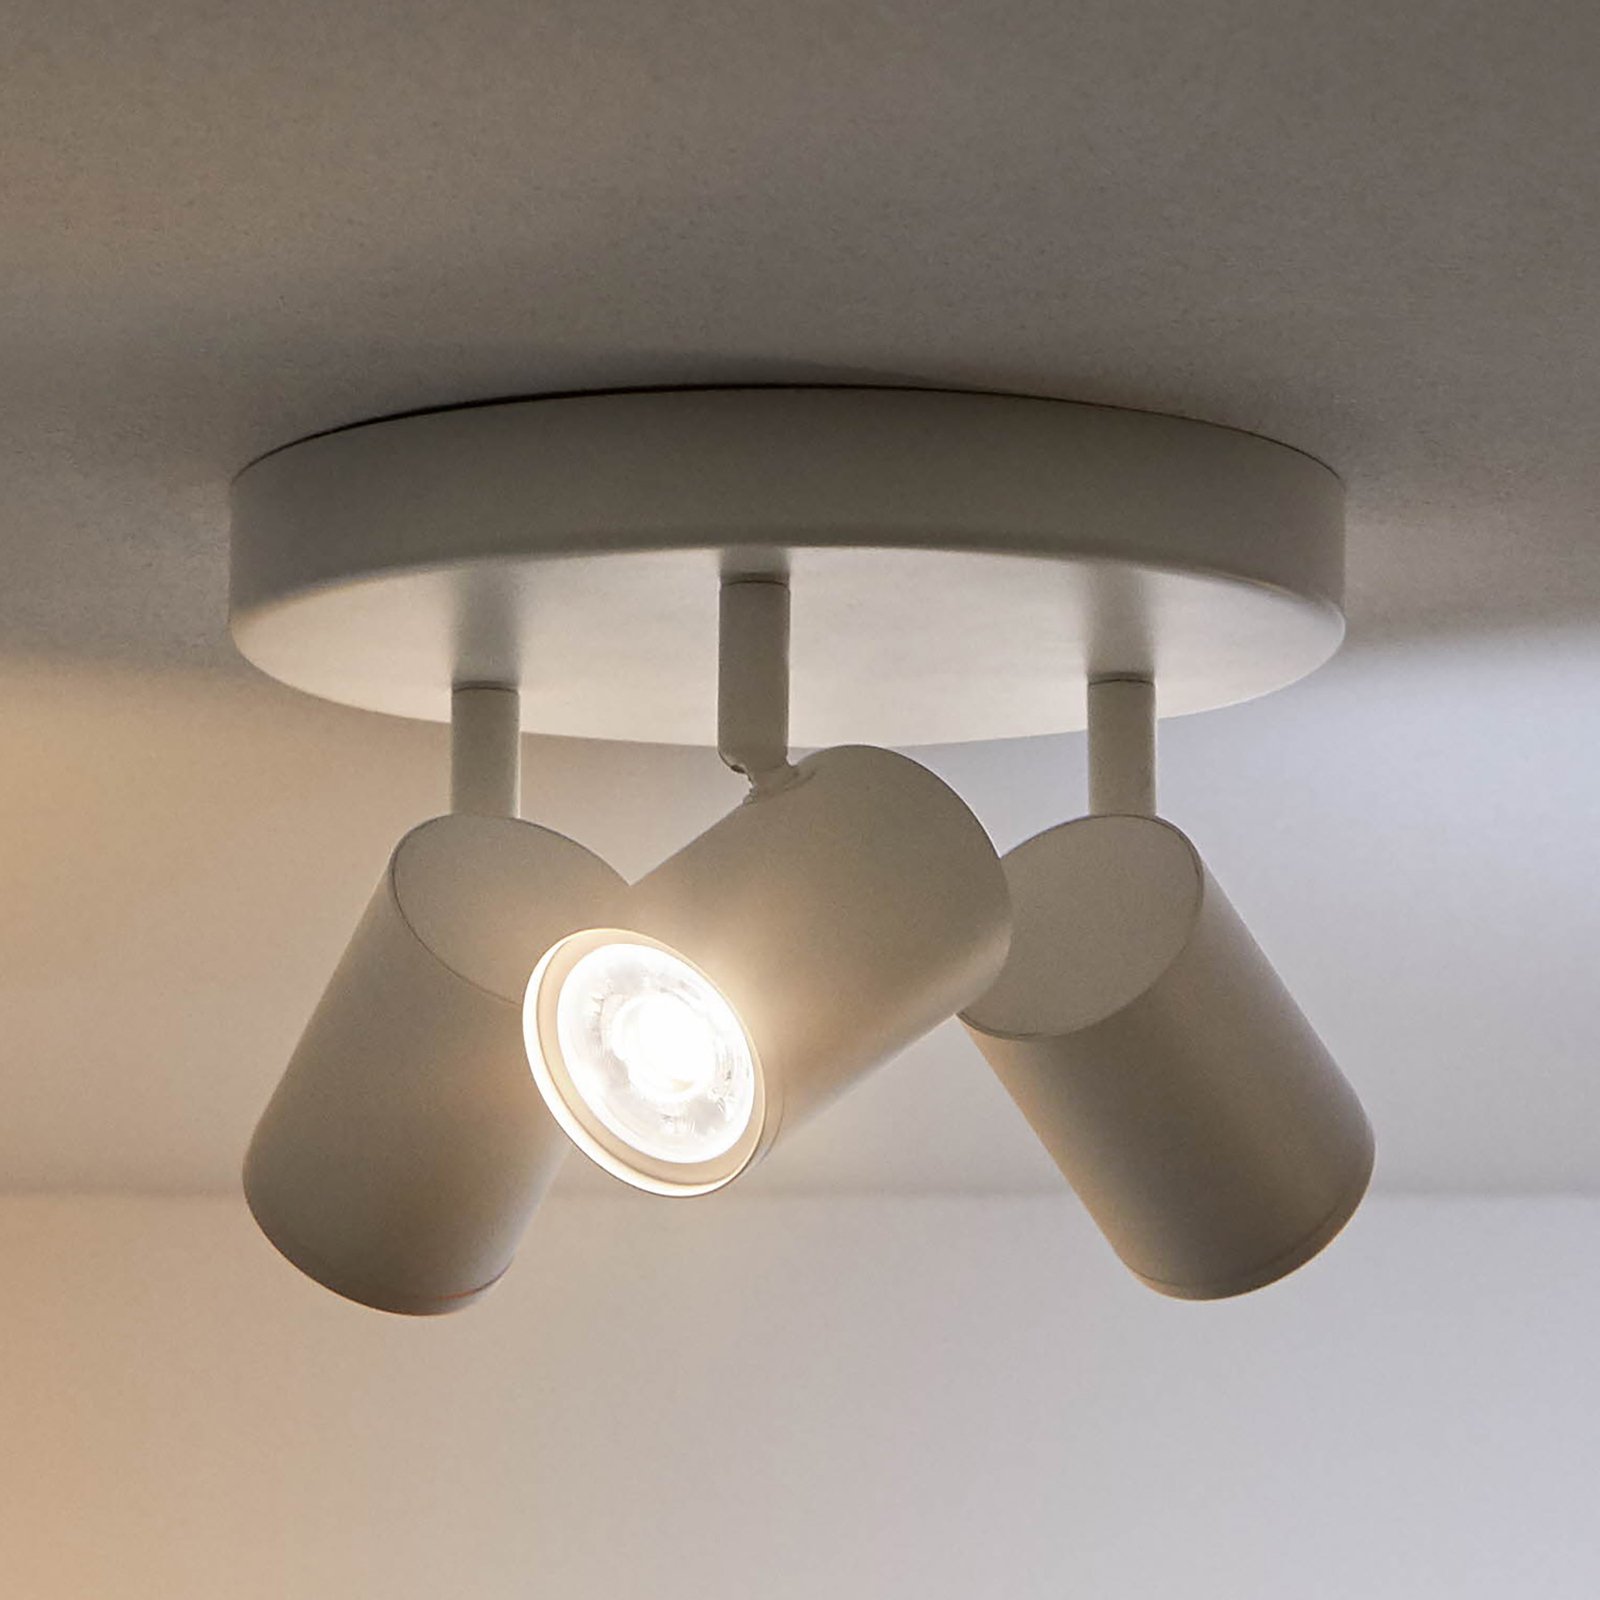 WiZ LED downlight Imageo, 3-bulb round, white